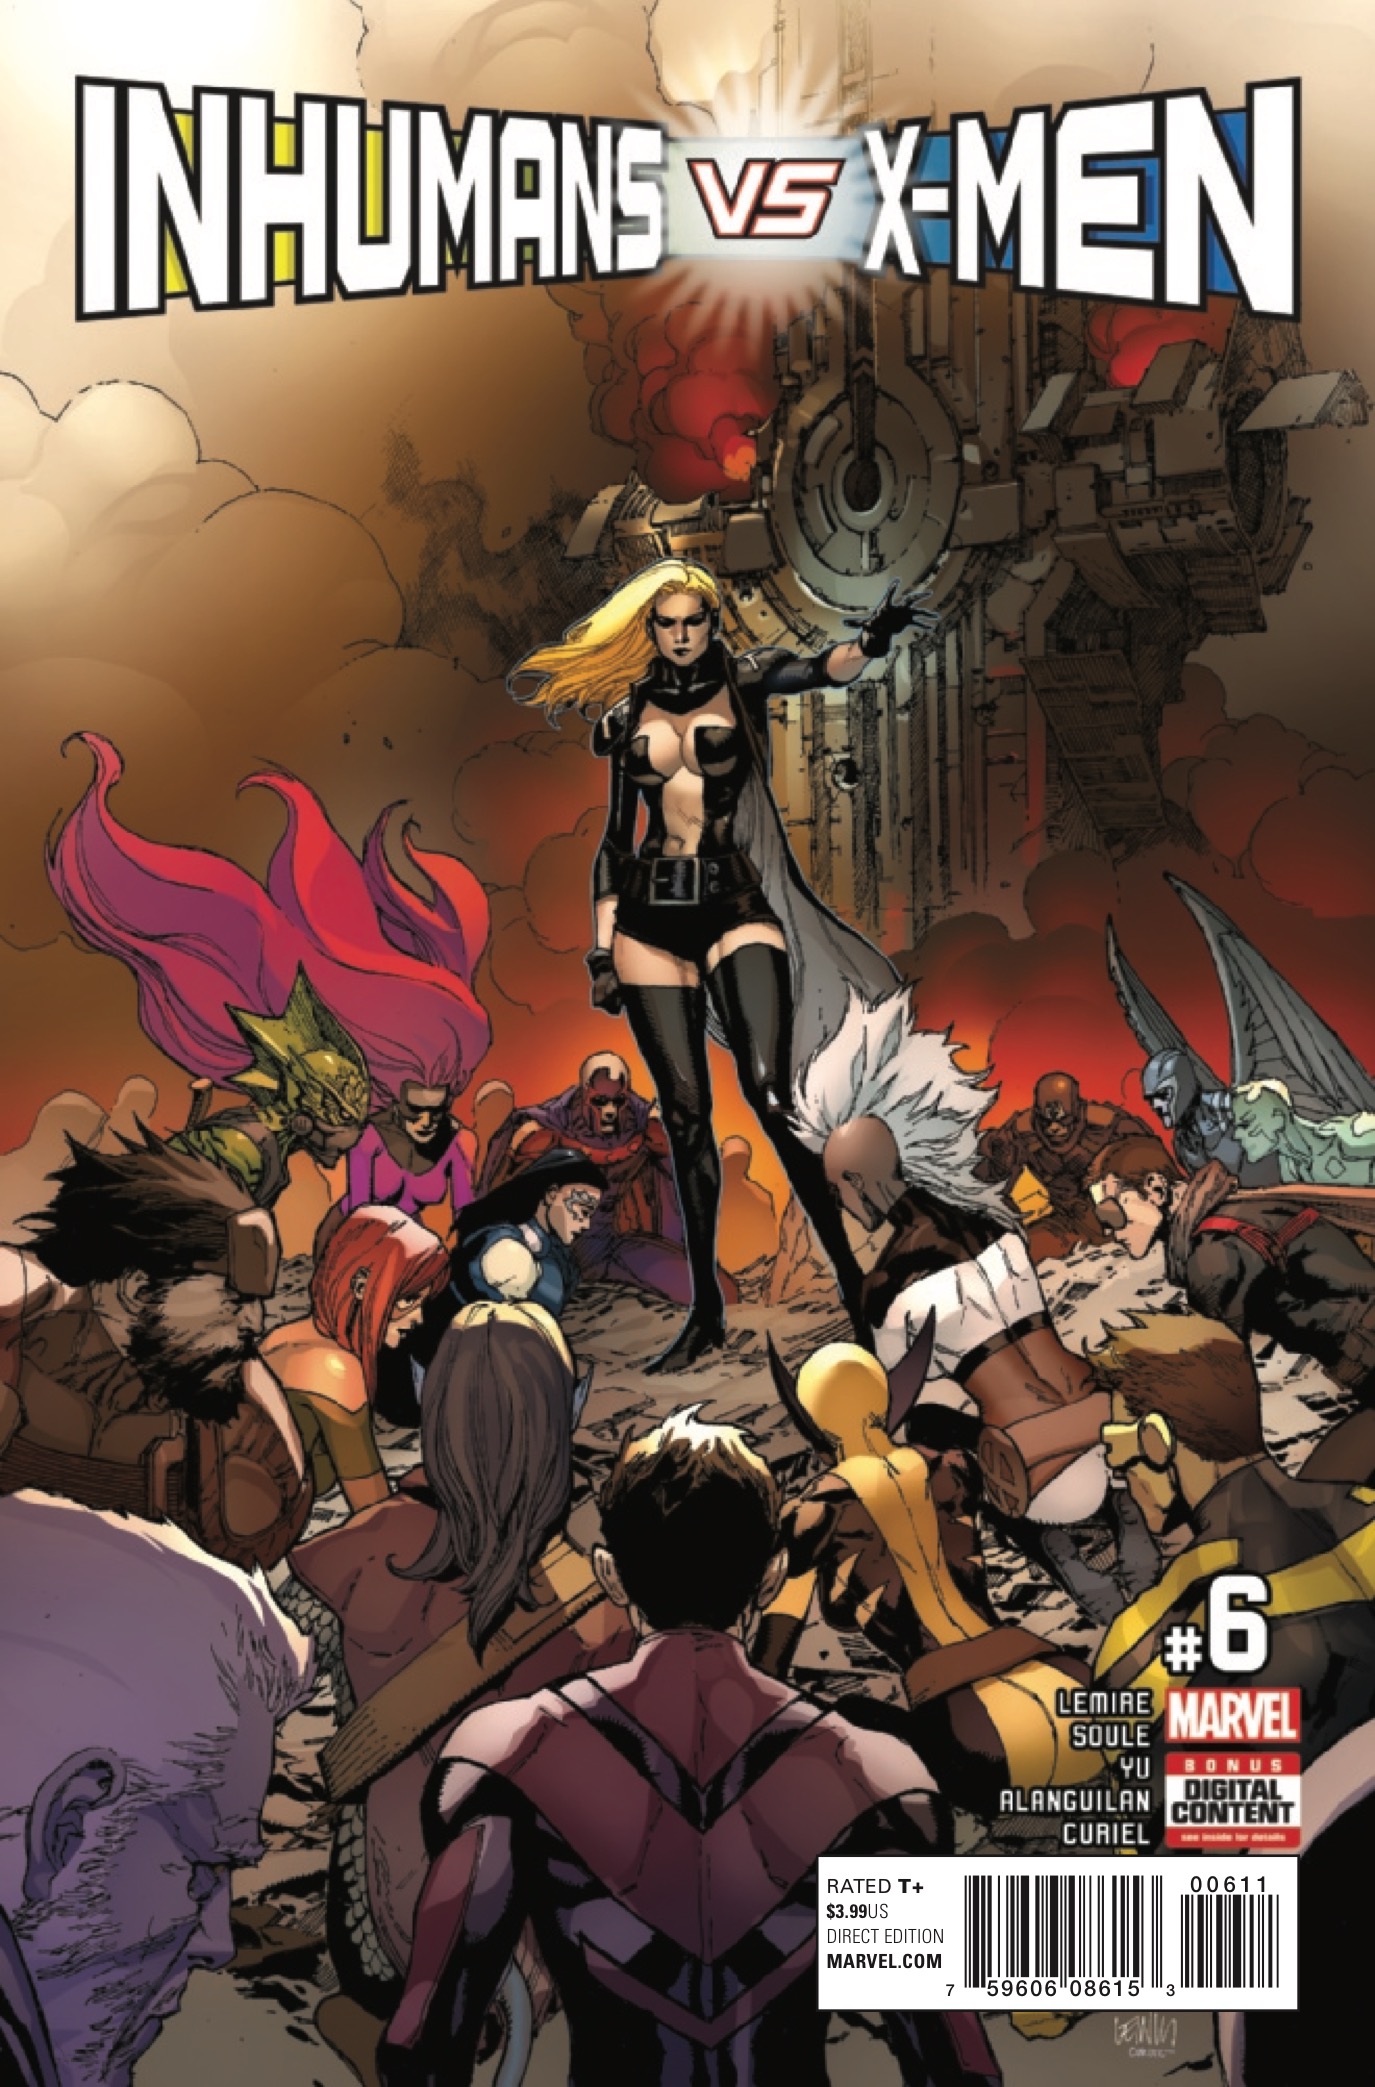 Inhumans Vs. X-Men #6 Review